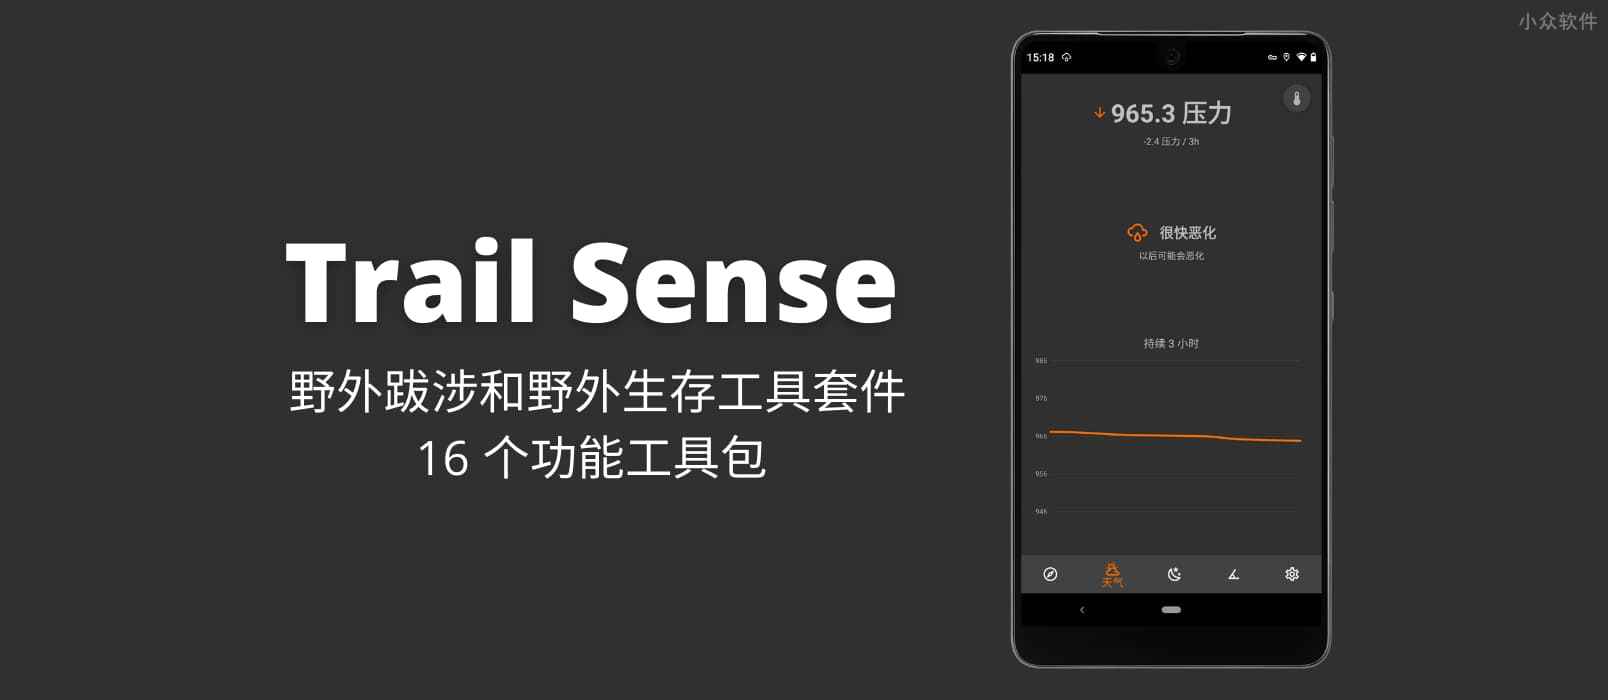 Trail Sense – 利用 Android 传感器的 21 个野外跋涉和野外生存工具套件